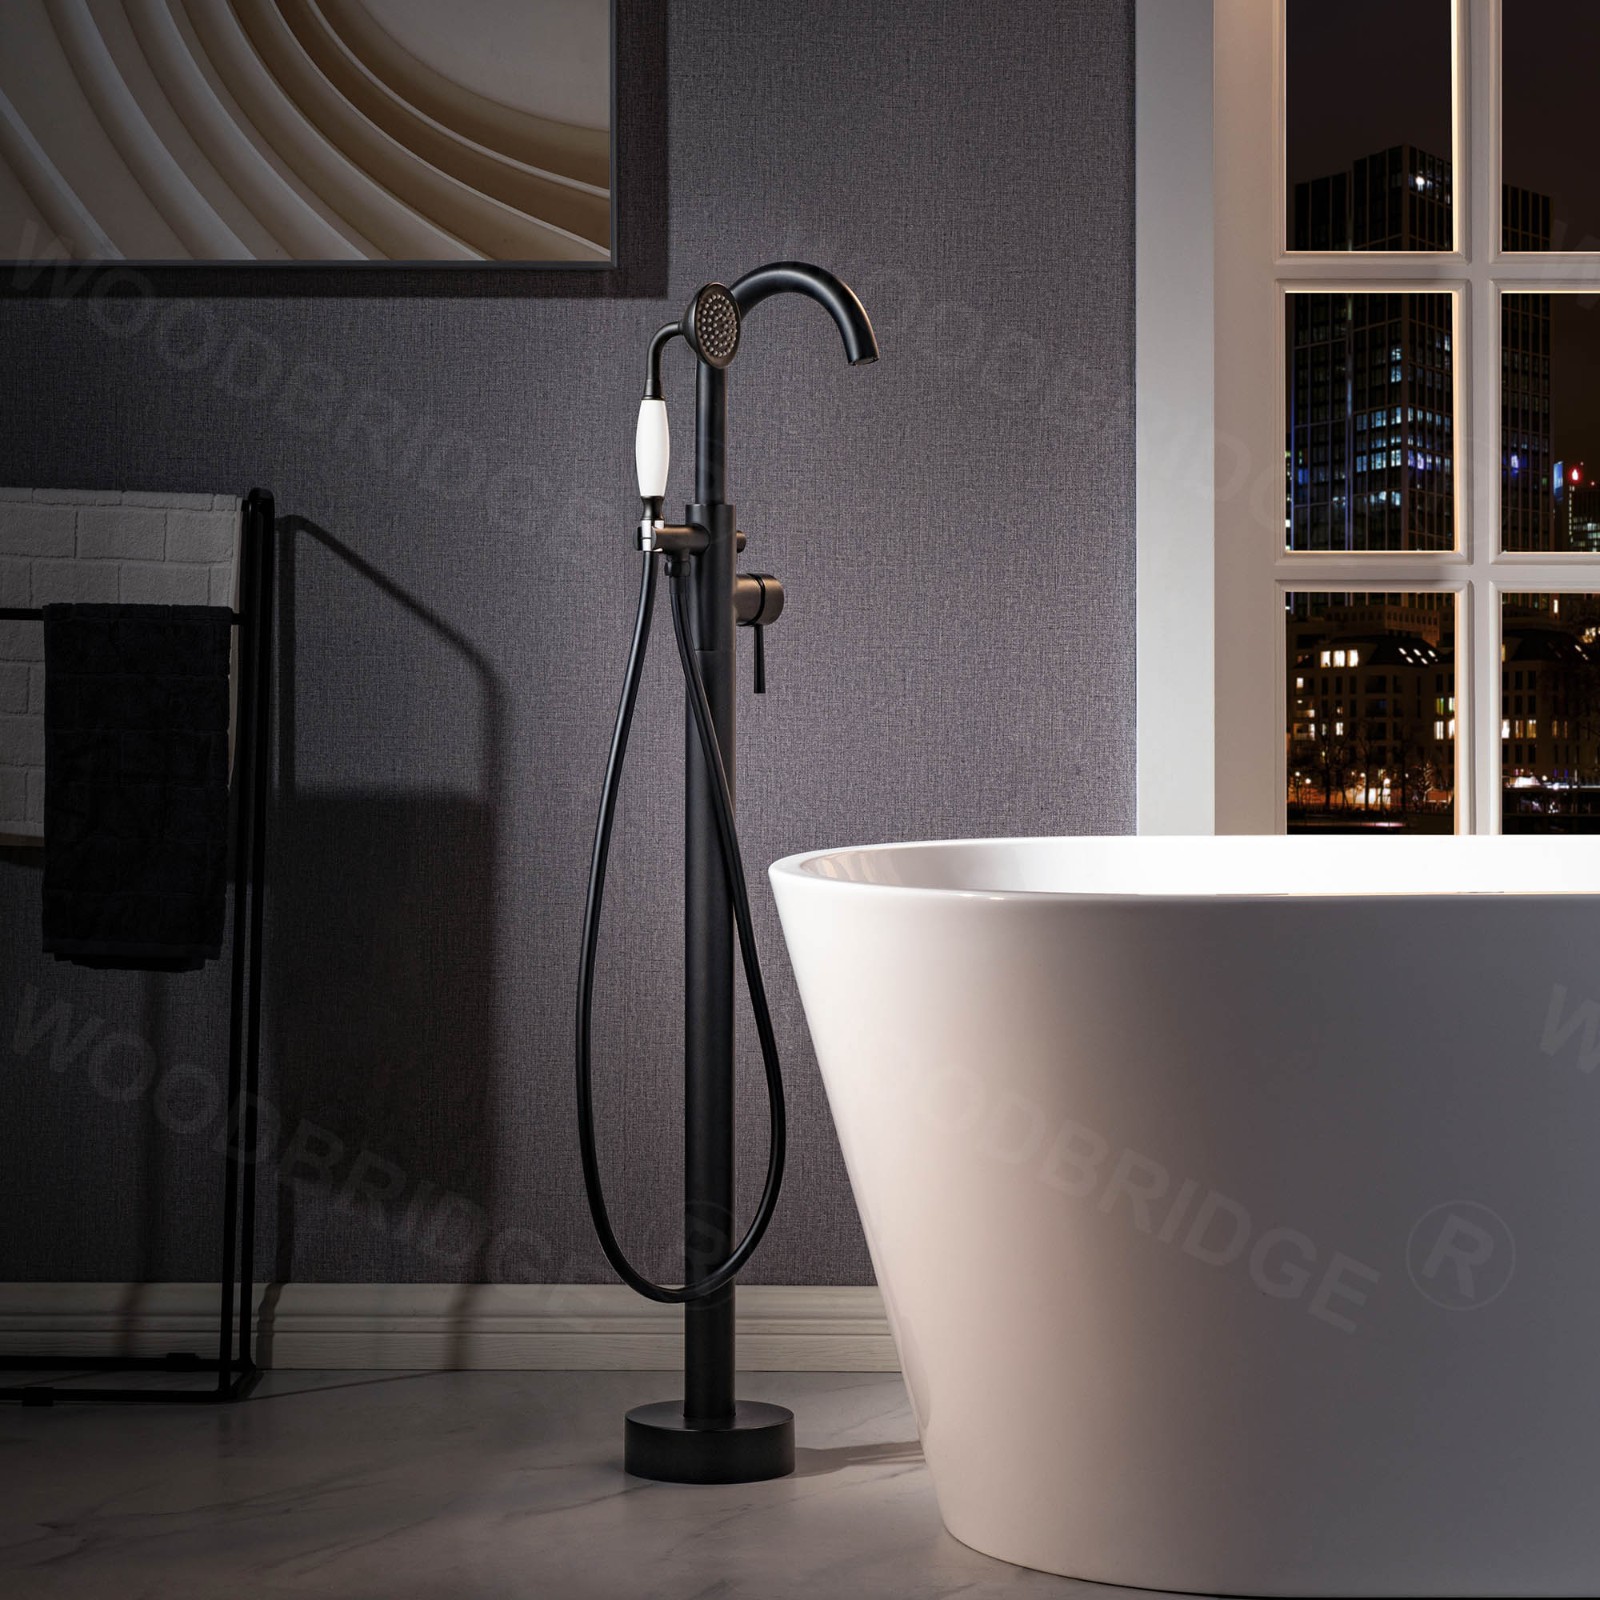  WOODBRIDGE F0025MBVT Fusion Single Handle Floor Mount Freestanding Tub Filler Faucet with Telephone Hand shower in Matte Black Finish._5256